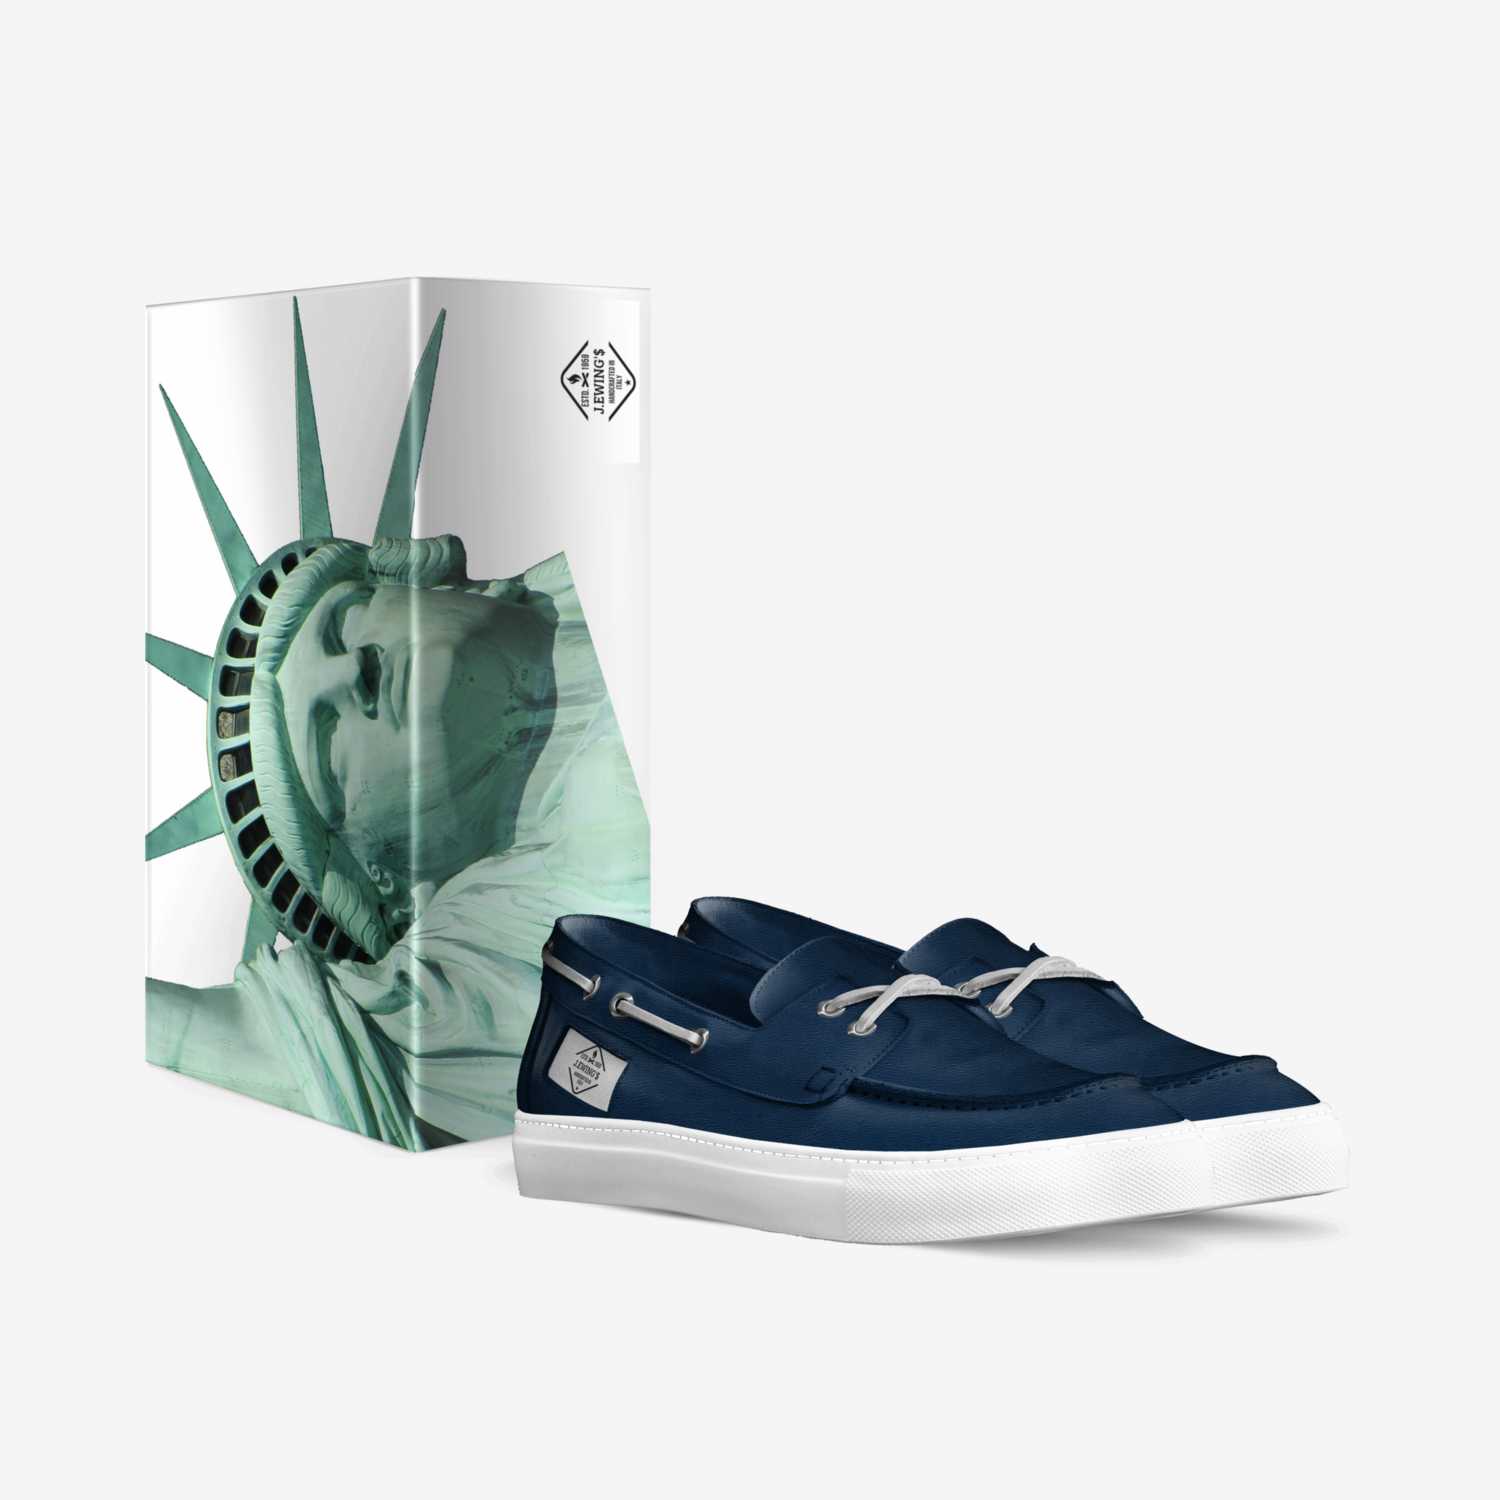 J.Ewing'$ custom made in Italy shoes by Jordan Ewing | Box view